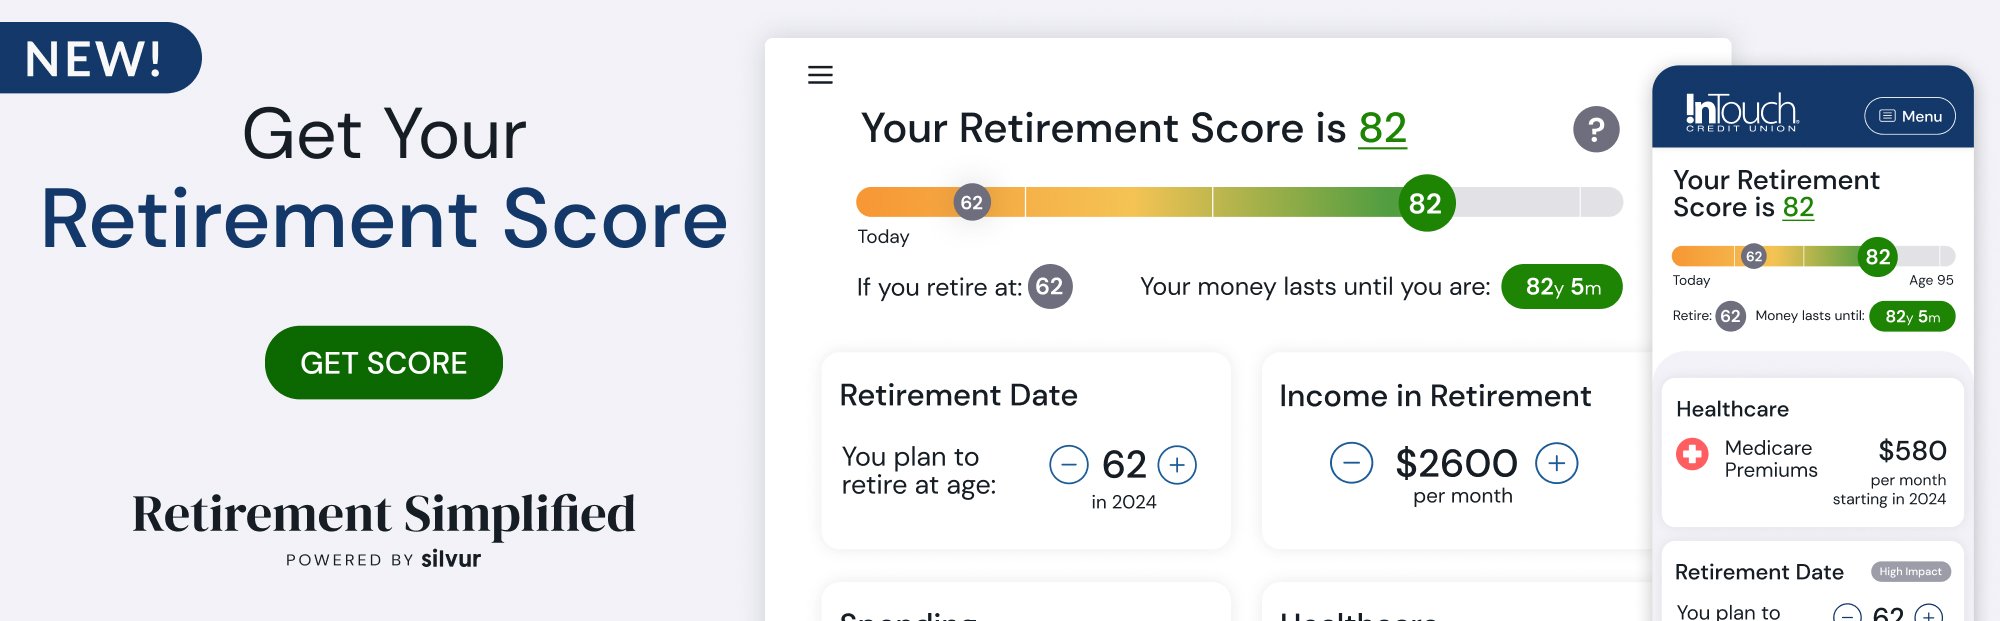 Get your retirement score at itcu.silvur.com